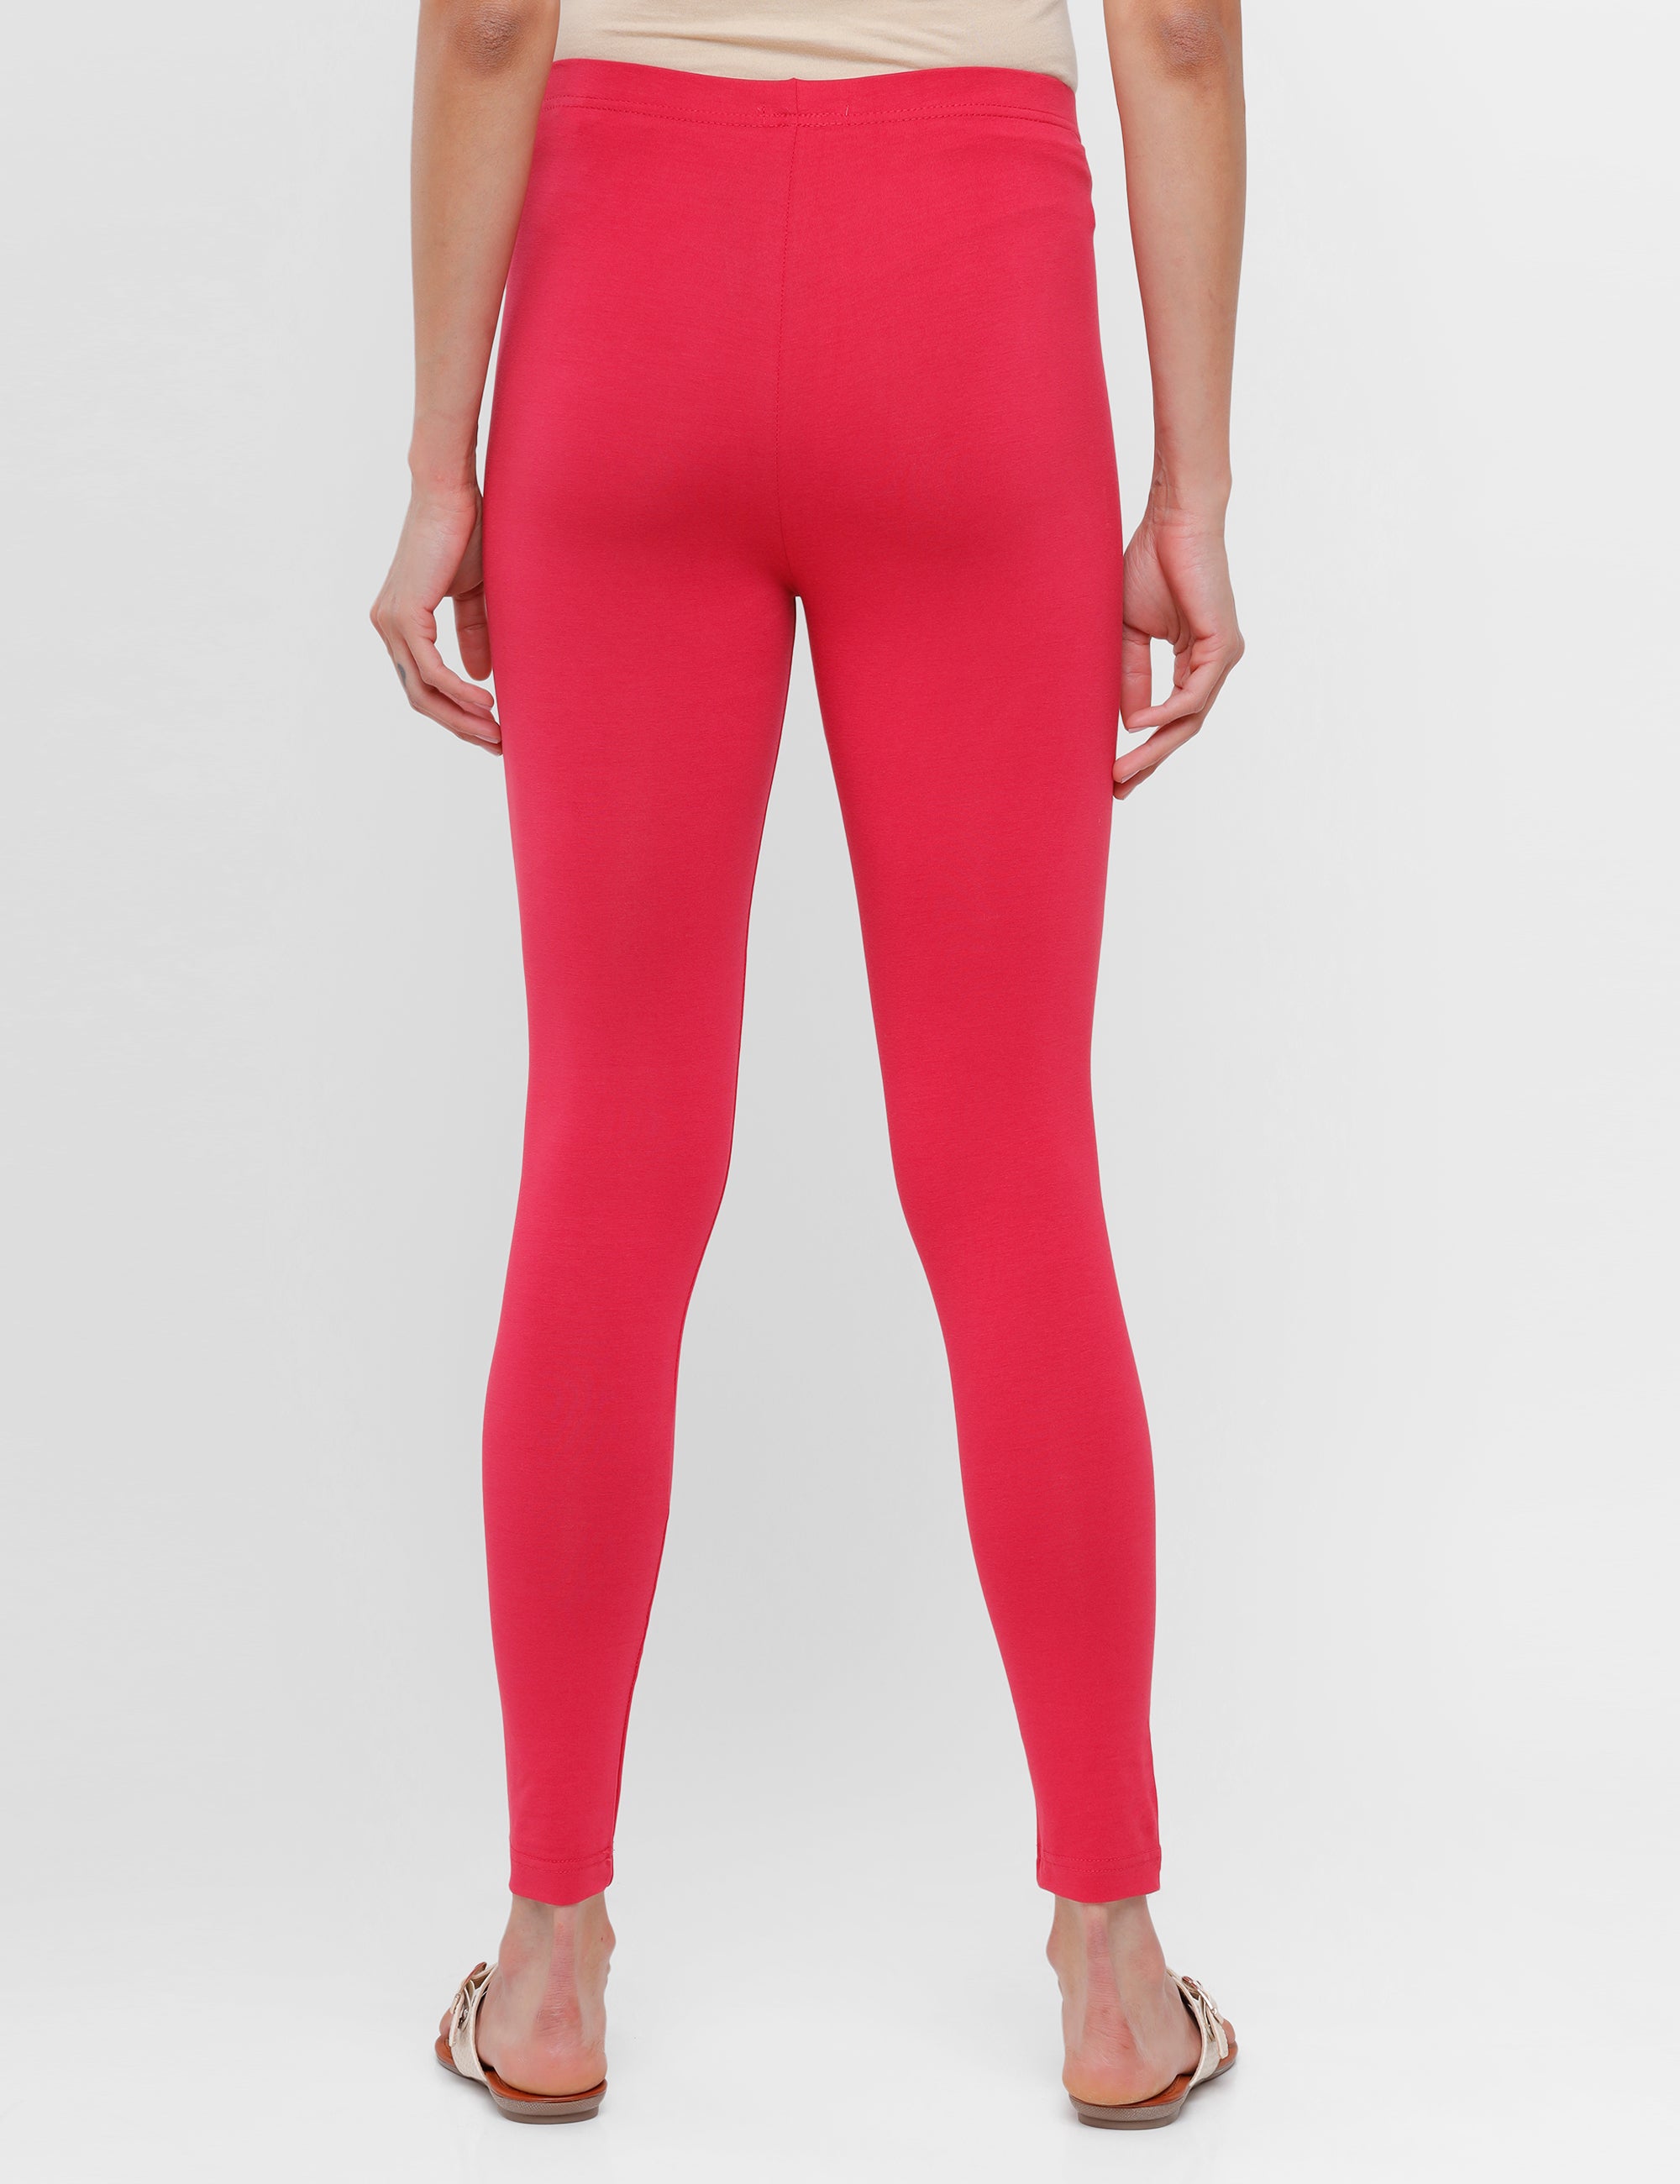 Buy Pink Leggings for Women by PERFORMAX Online | Ajio.com